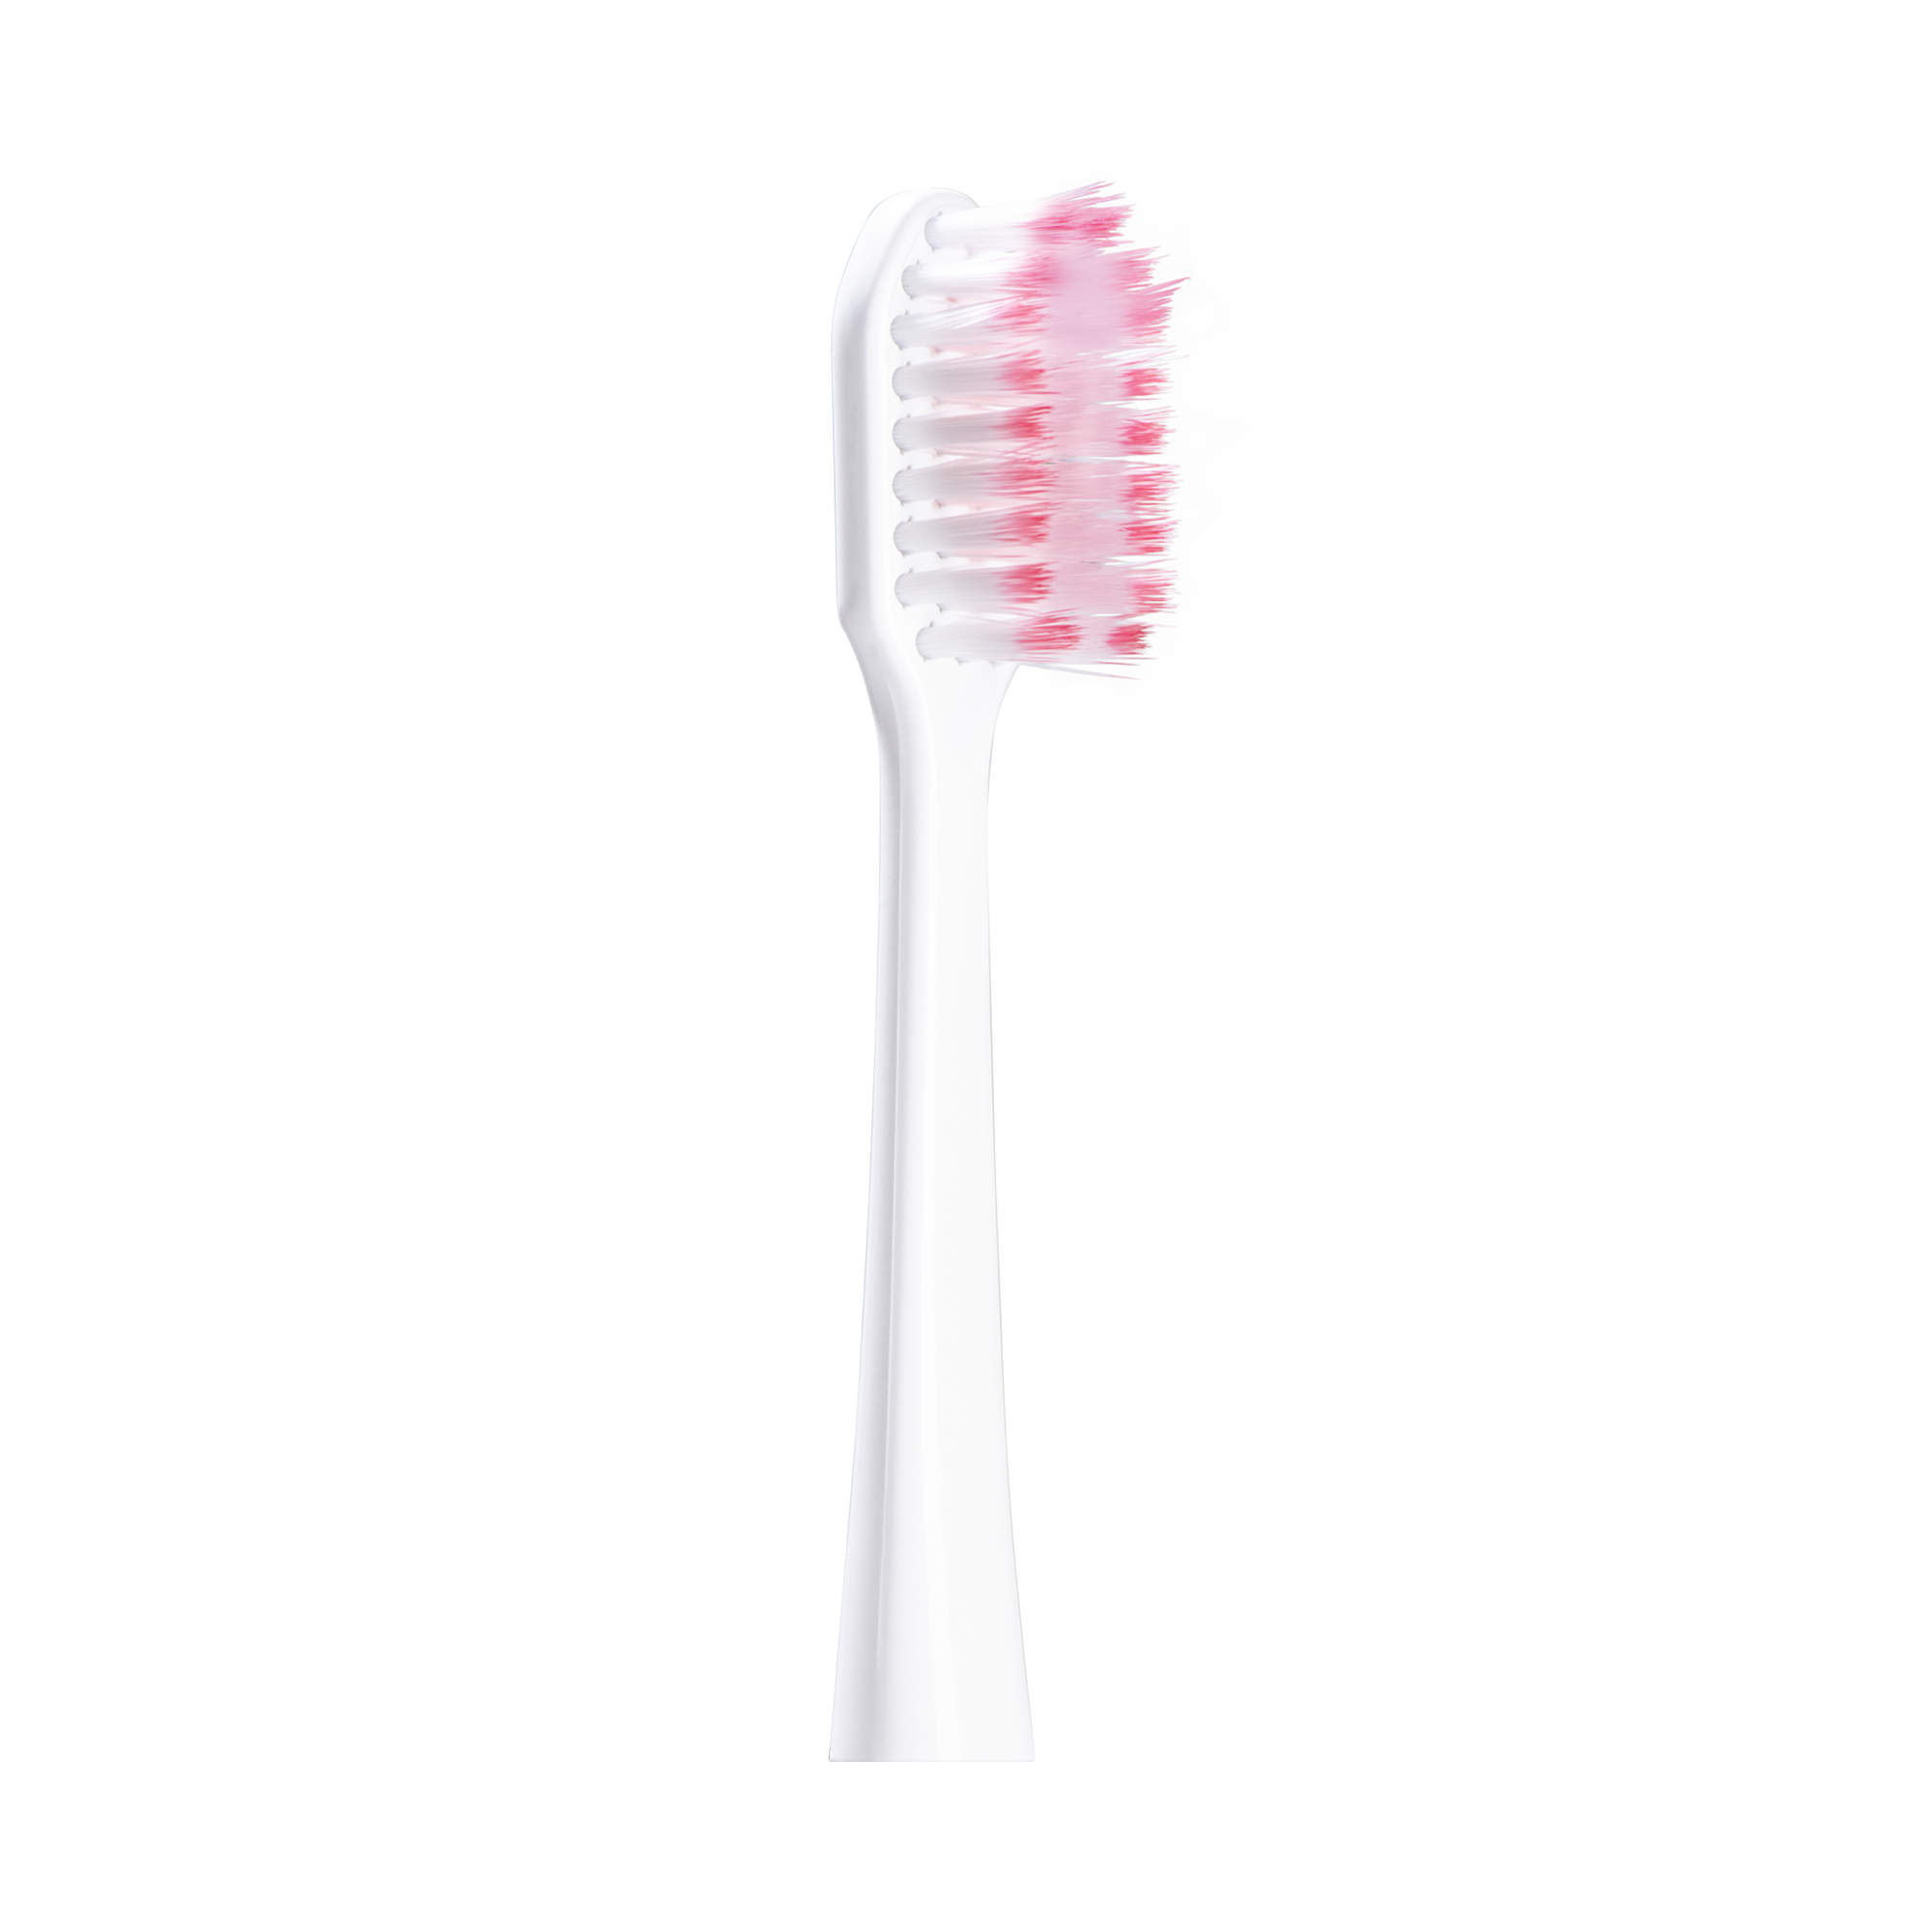 GUM® SONIC SENSITIVE Battery Toothbrush Refill Heads